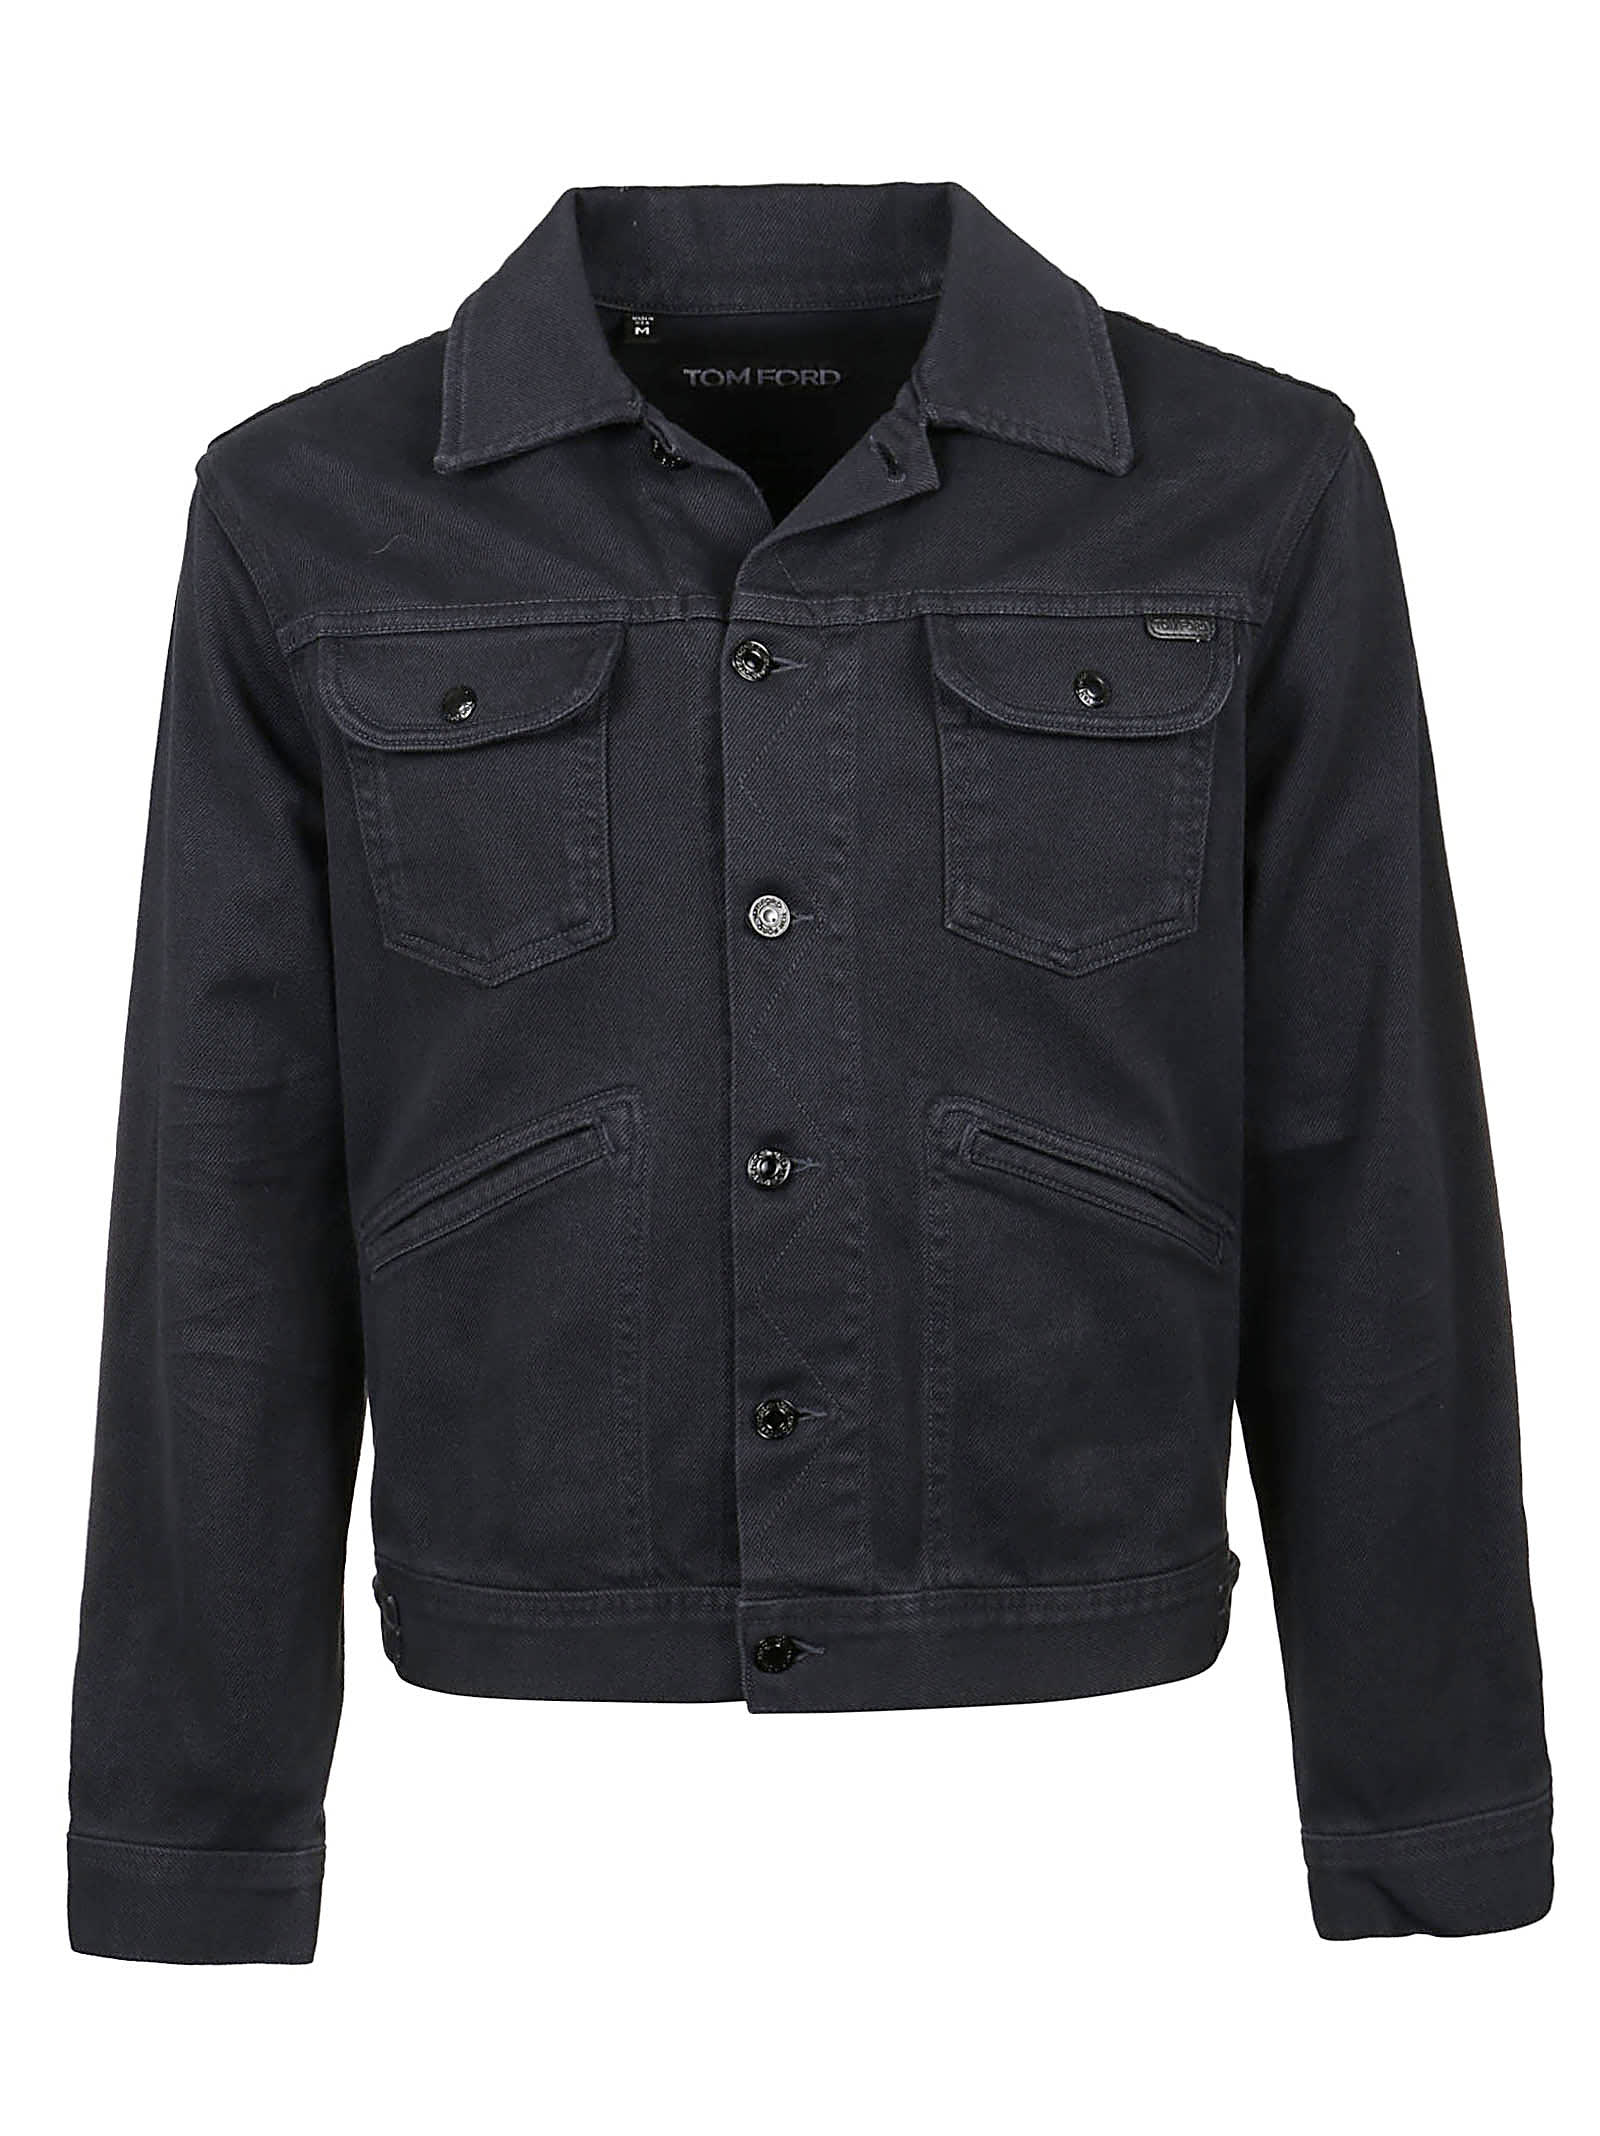 Tom Ford Jeans Jacket In Dark Grey